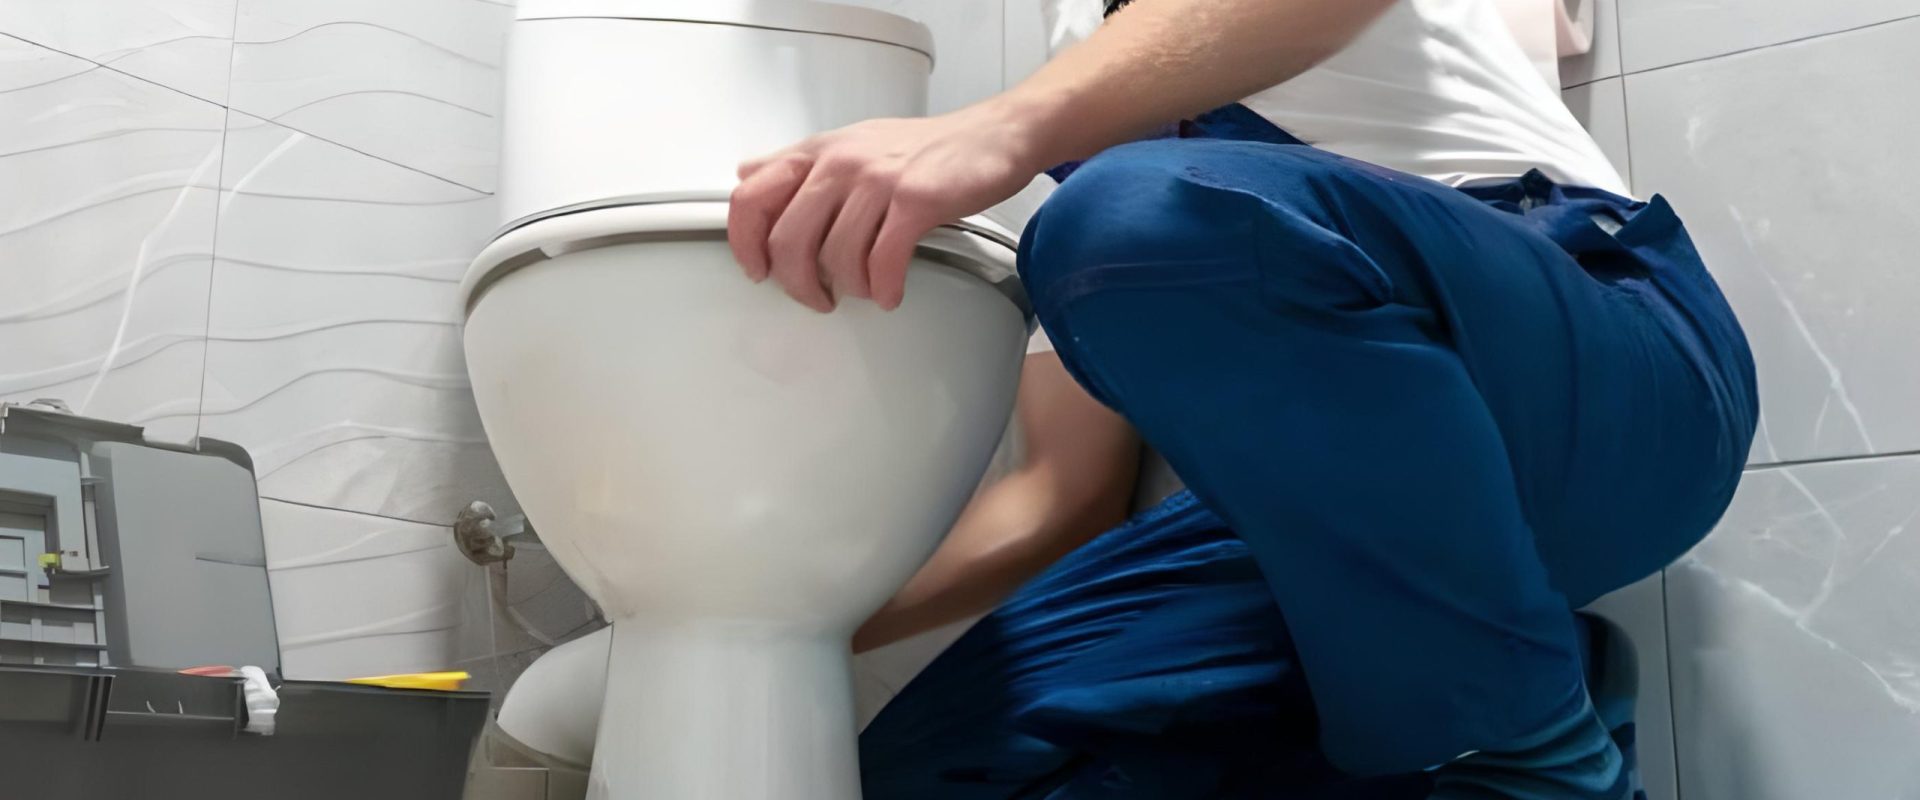 plumber fixing the toilet